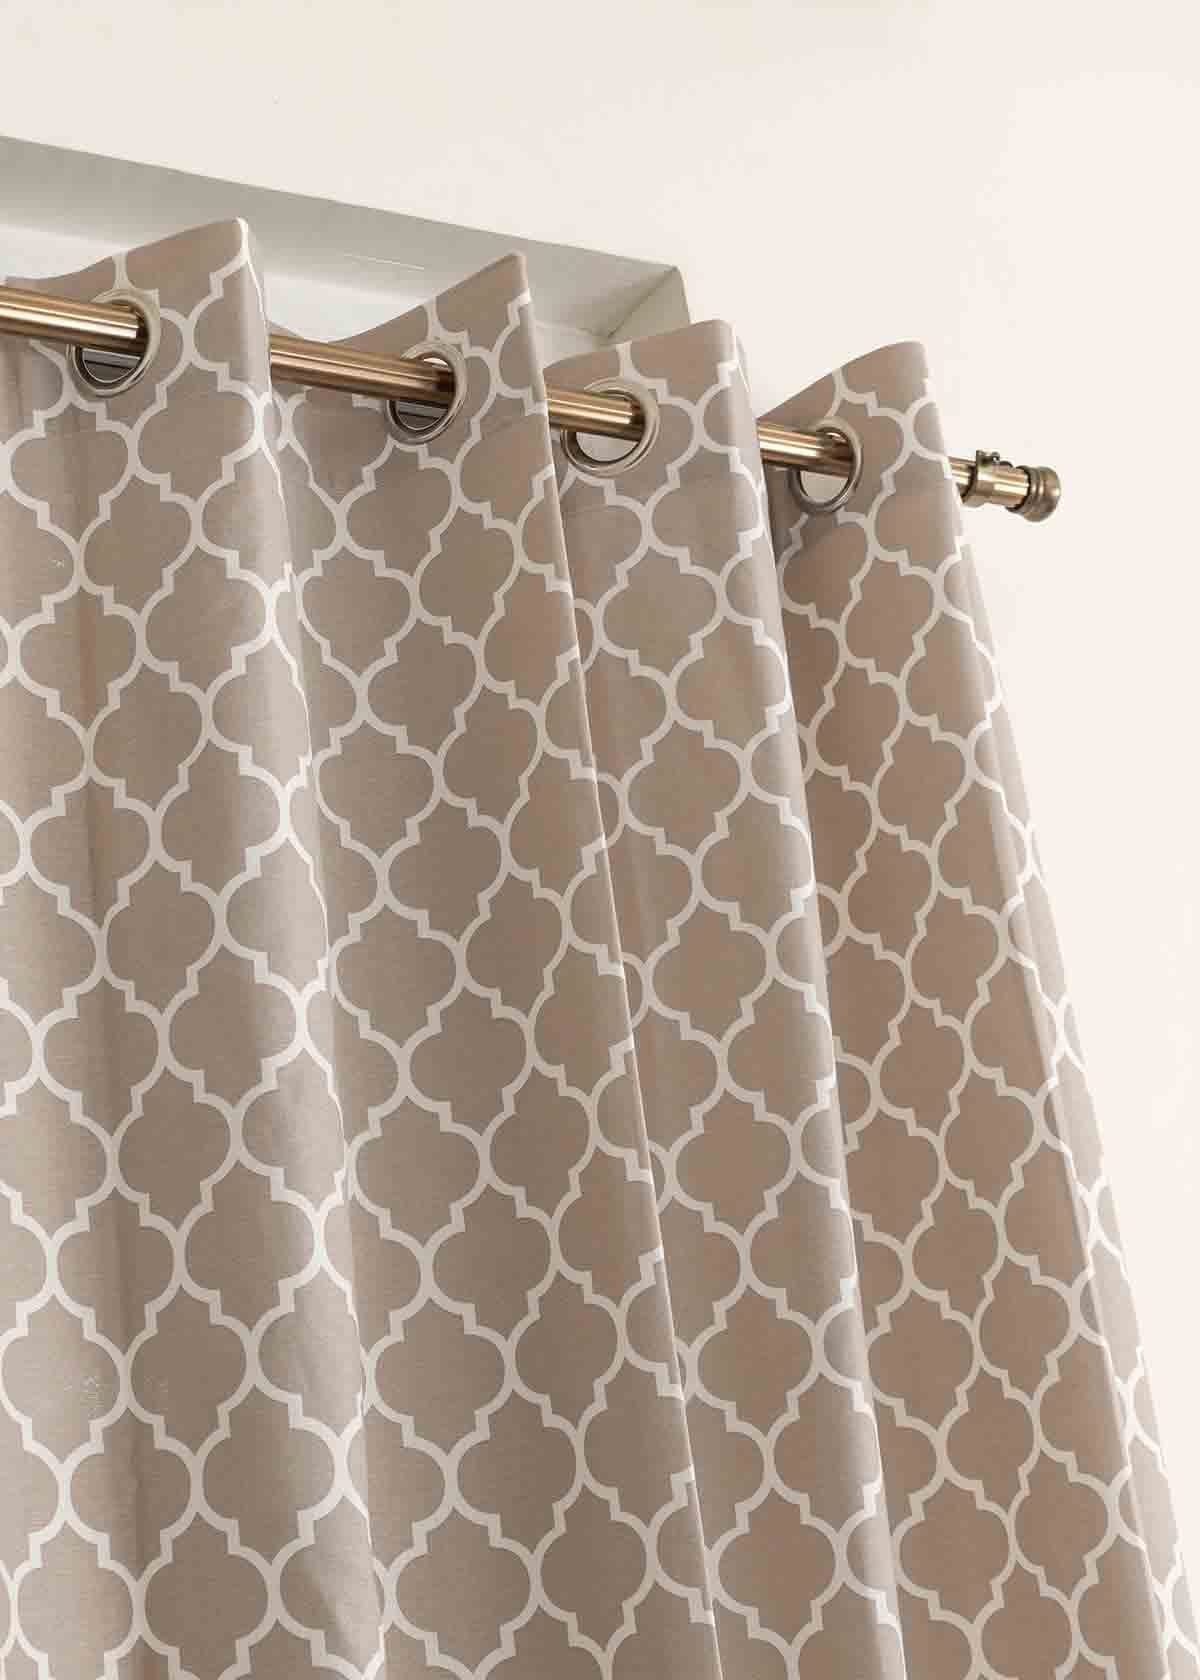 Reverse Trellis 100% cotton geometric curtain for bed room - Room darkening - Walnut Grey - Pack of 1